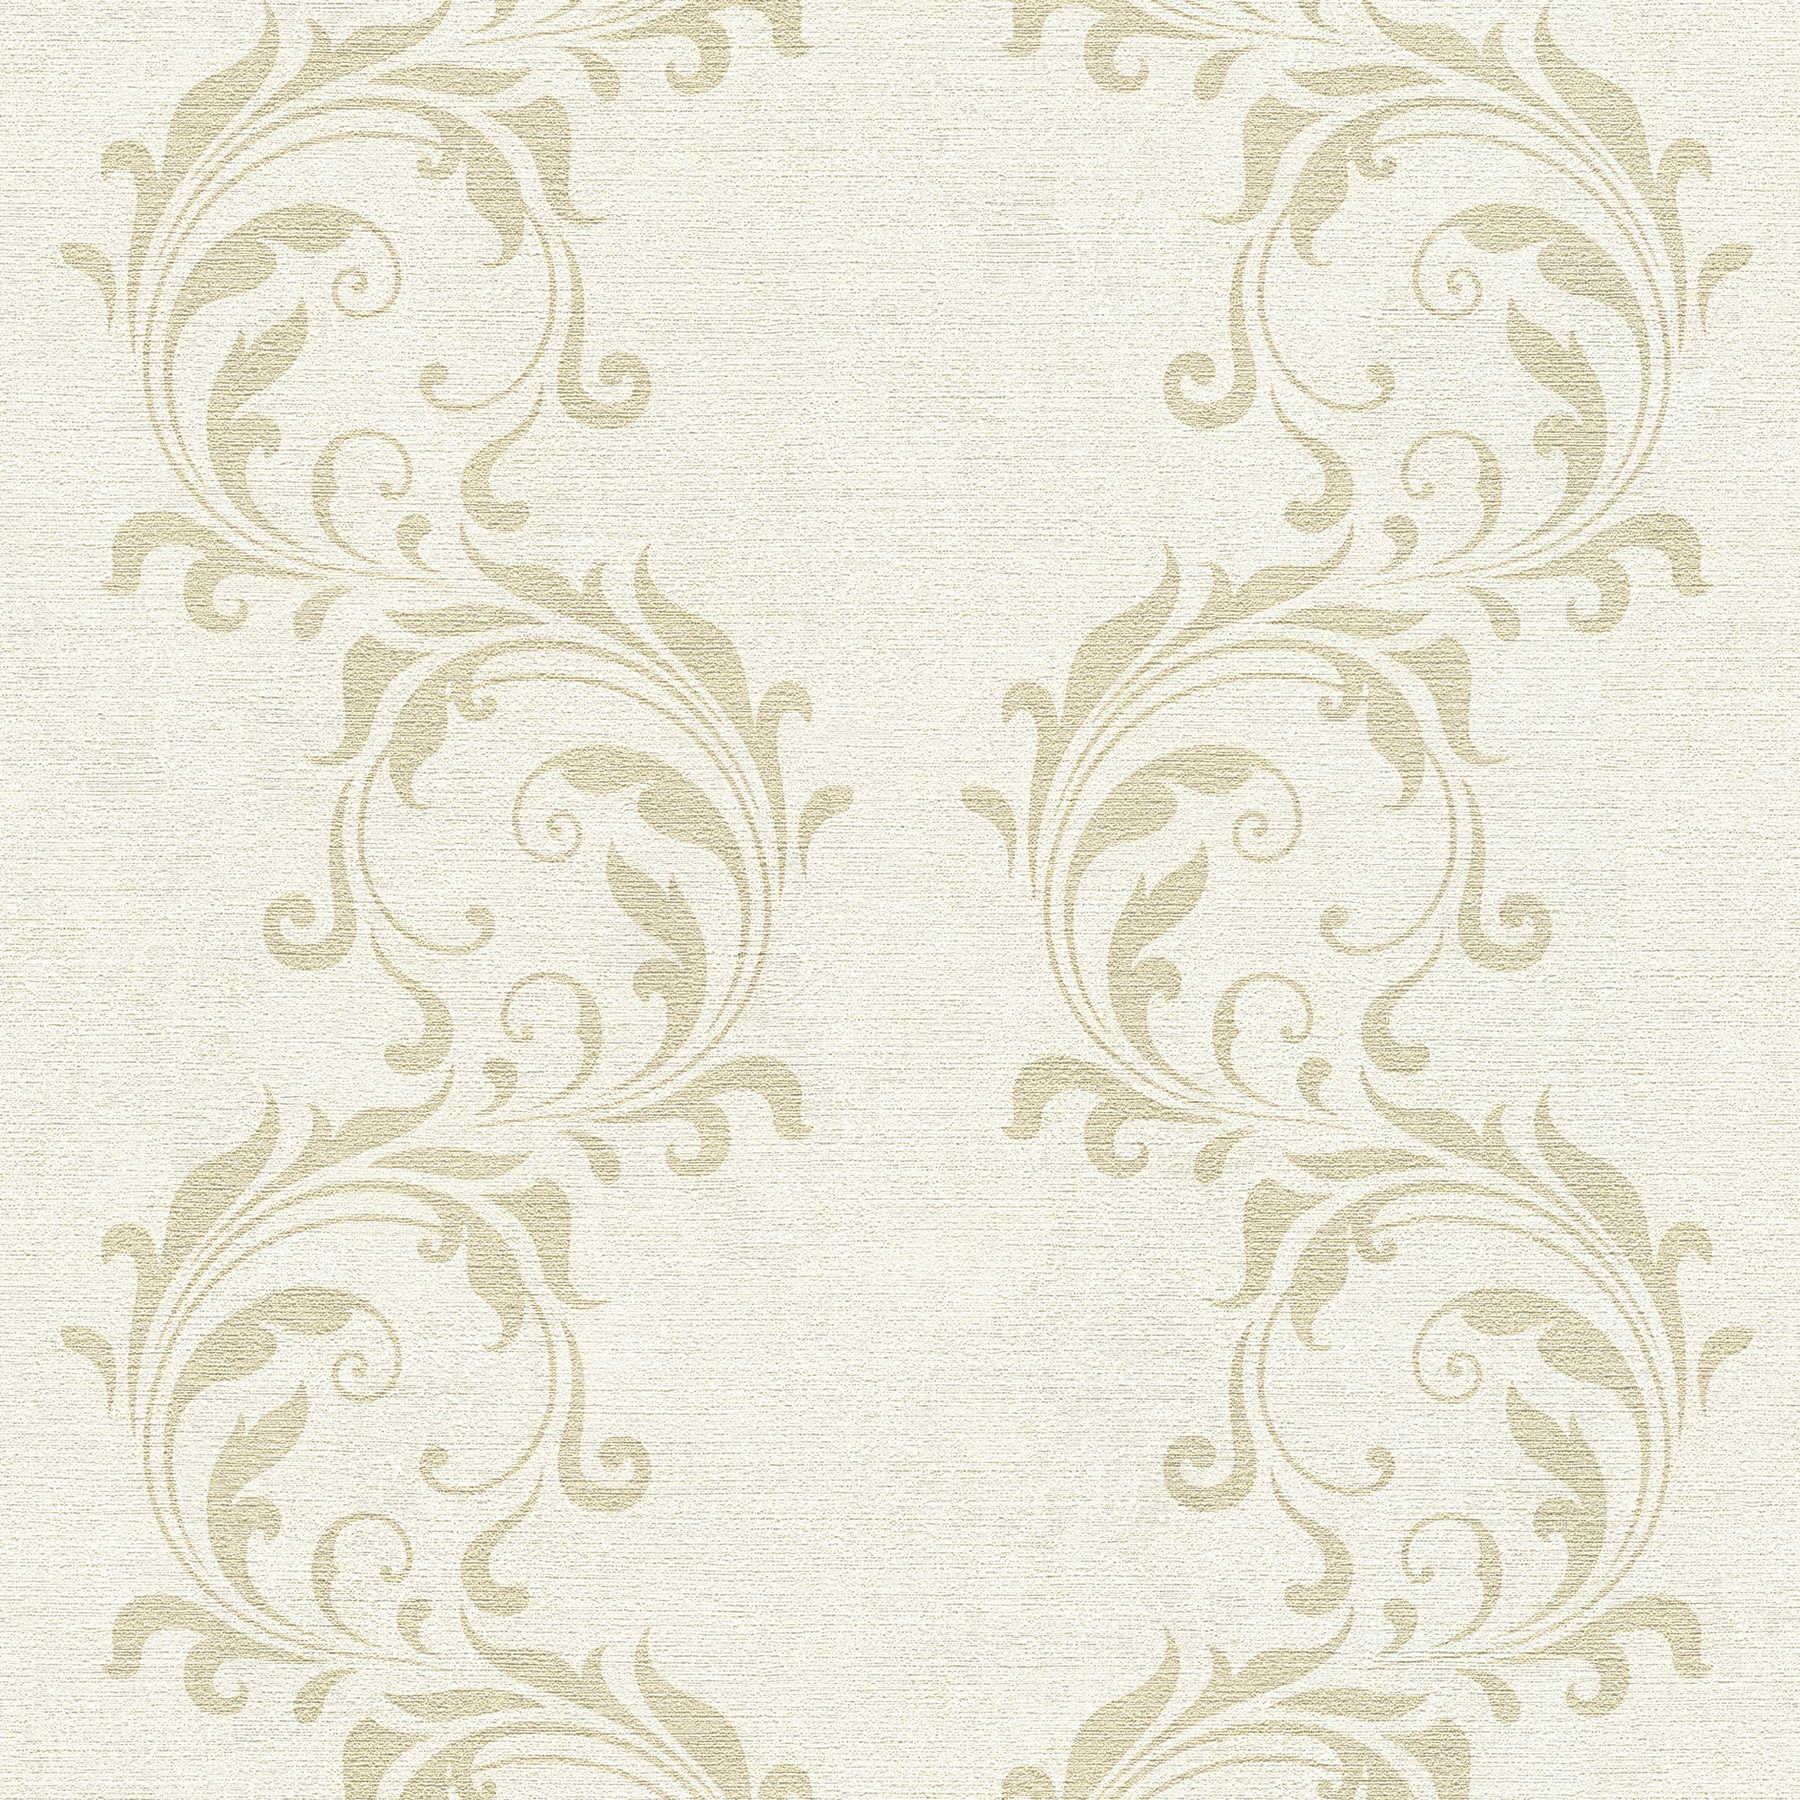 Pattern wallpaper tendril ornaments & plaster texture - cream, metallic
